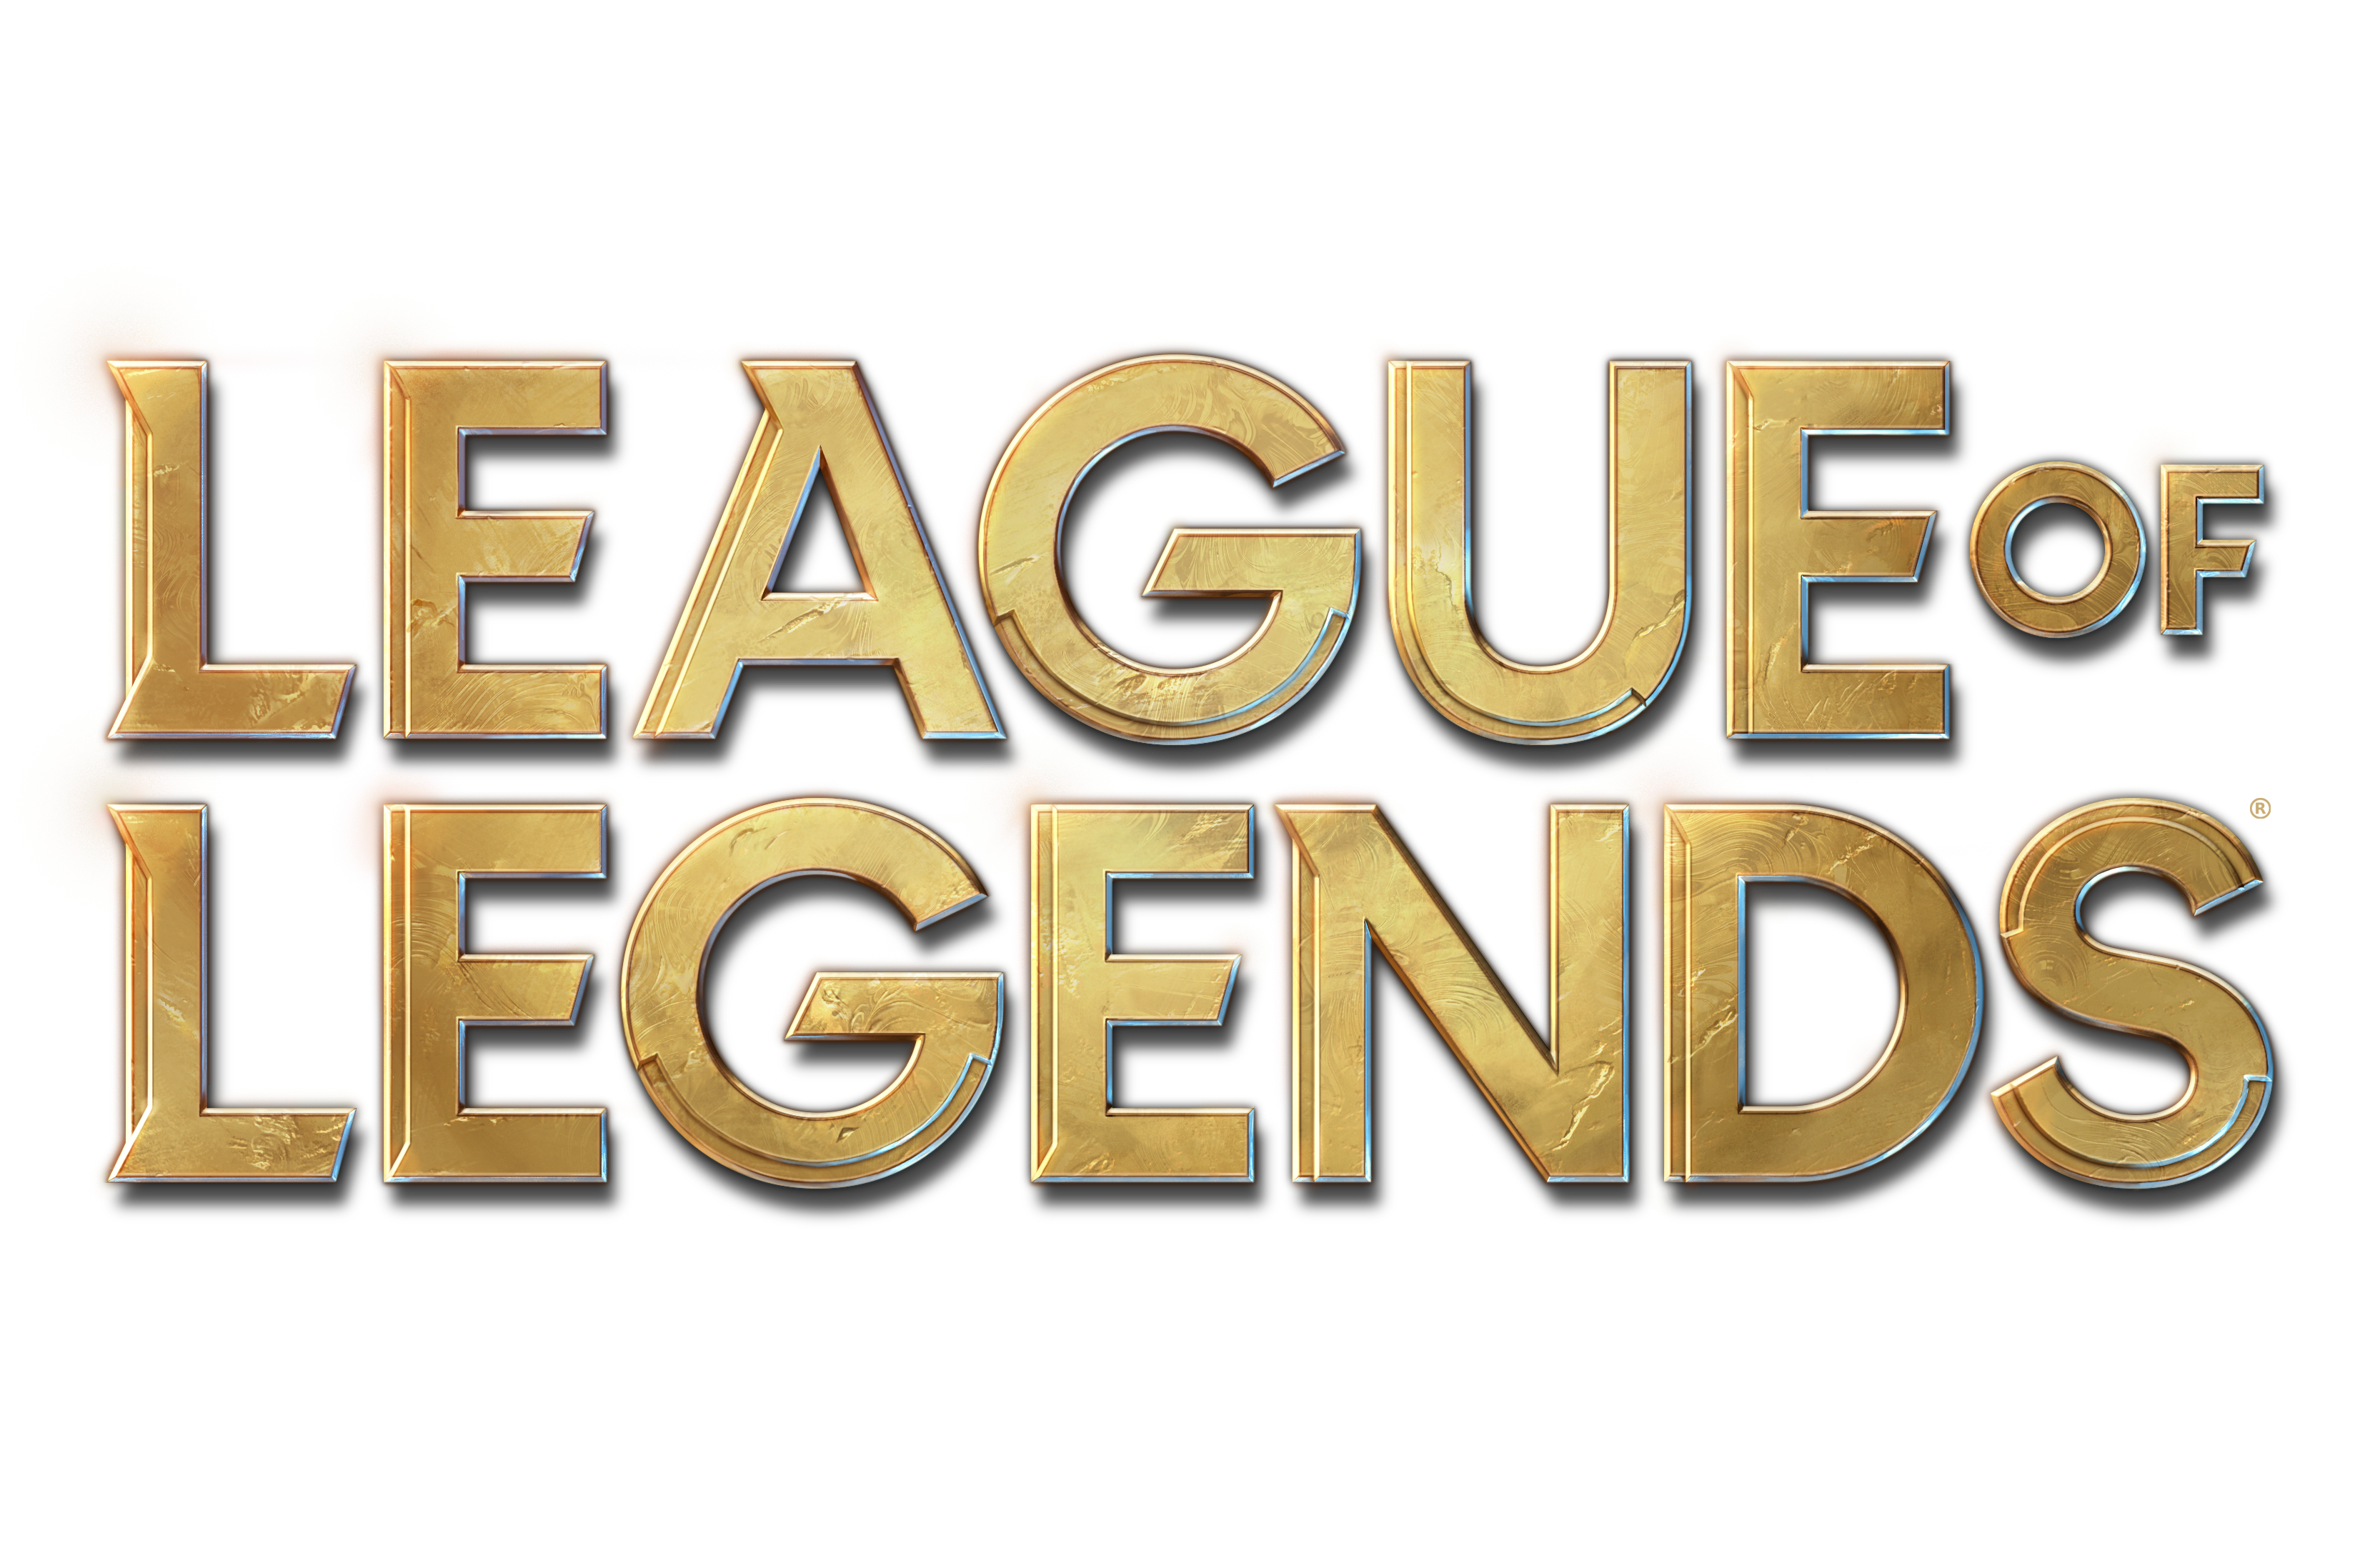 League of legends tournament maker